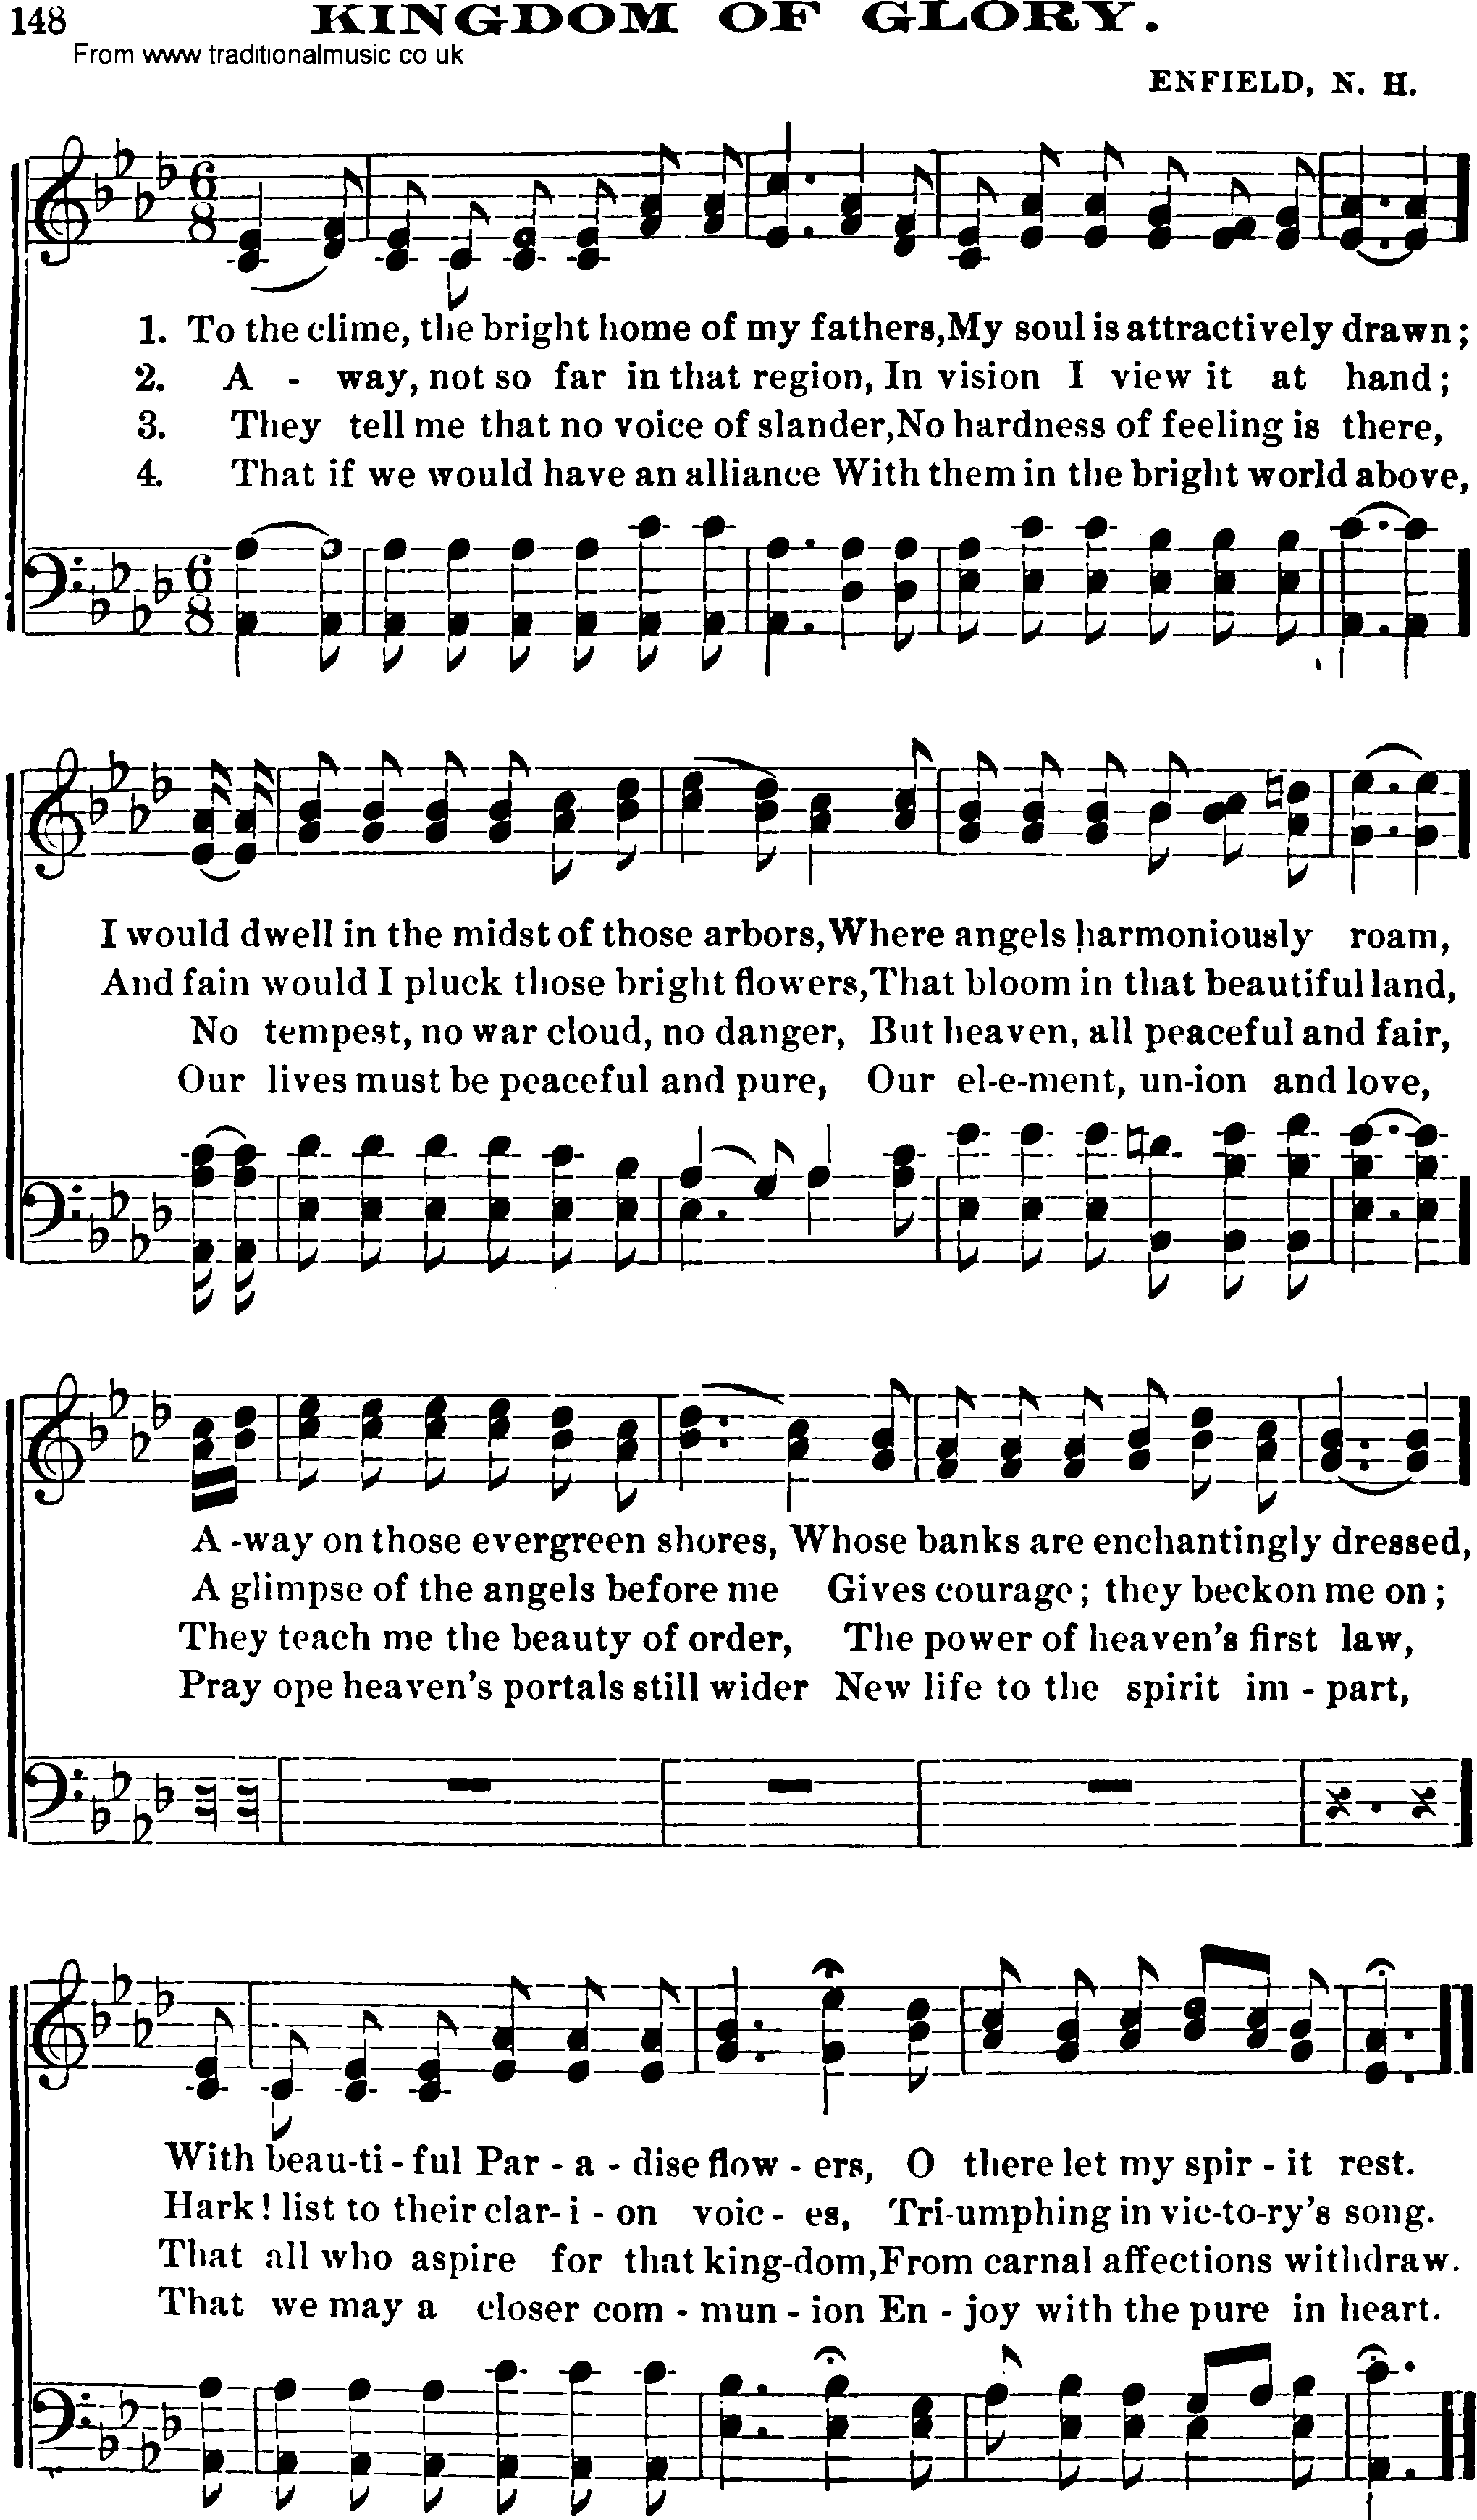 Shaker Music collection, Hymn: Kingdom Of Glory, sheetmusic and PDF